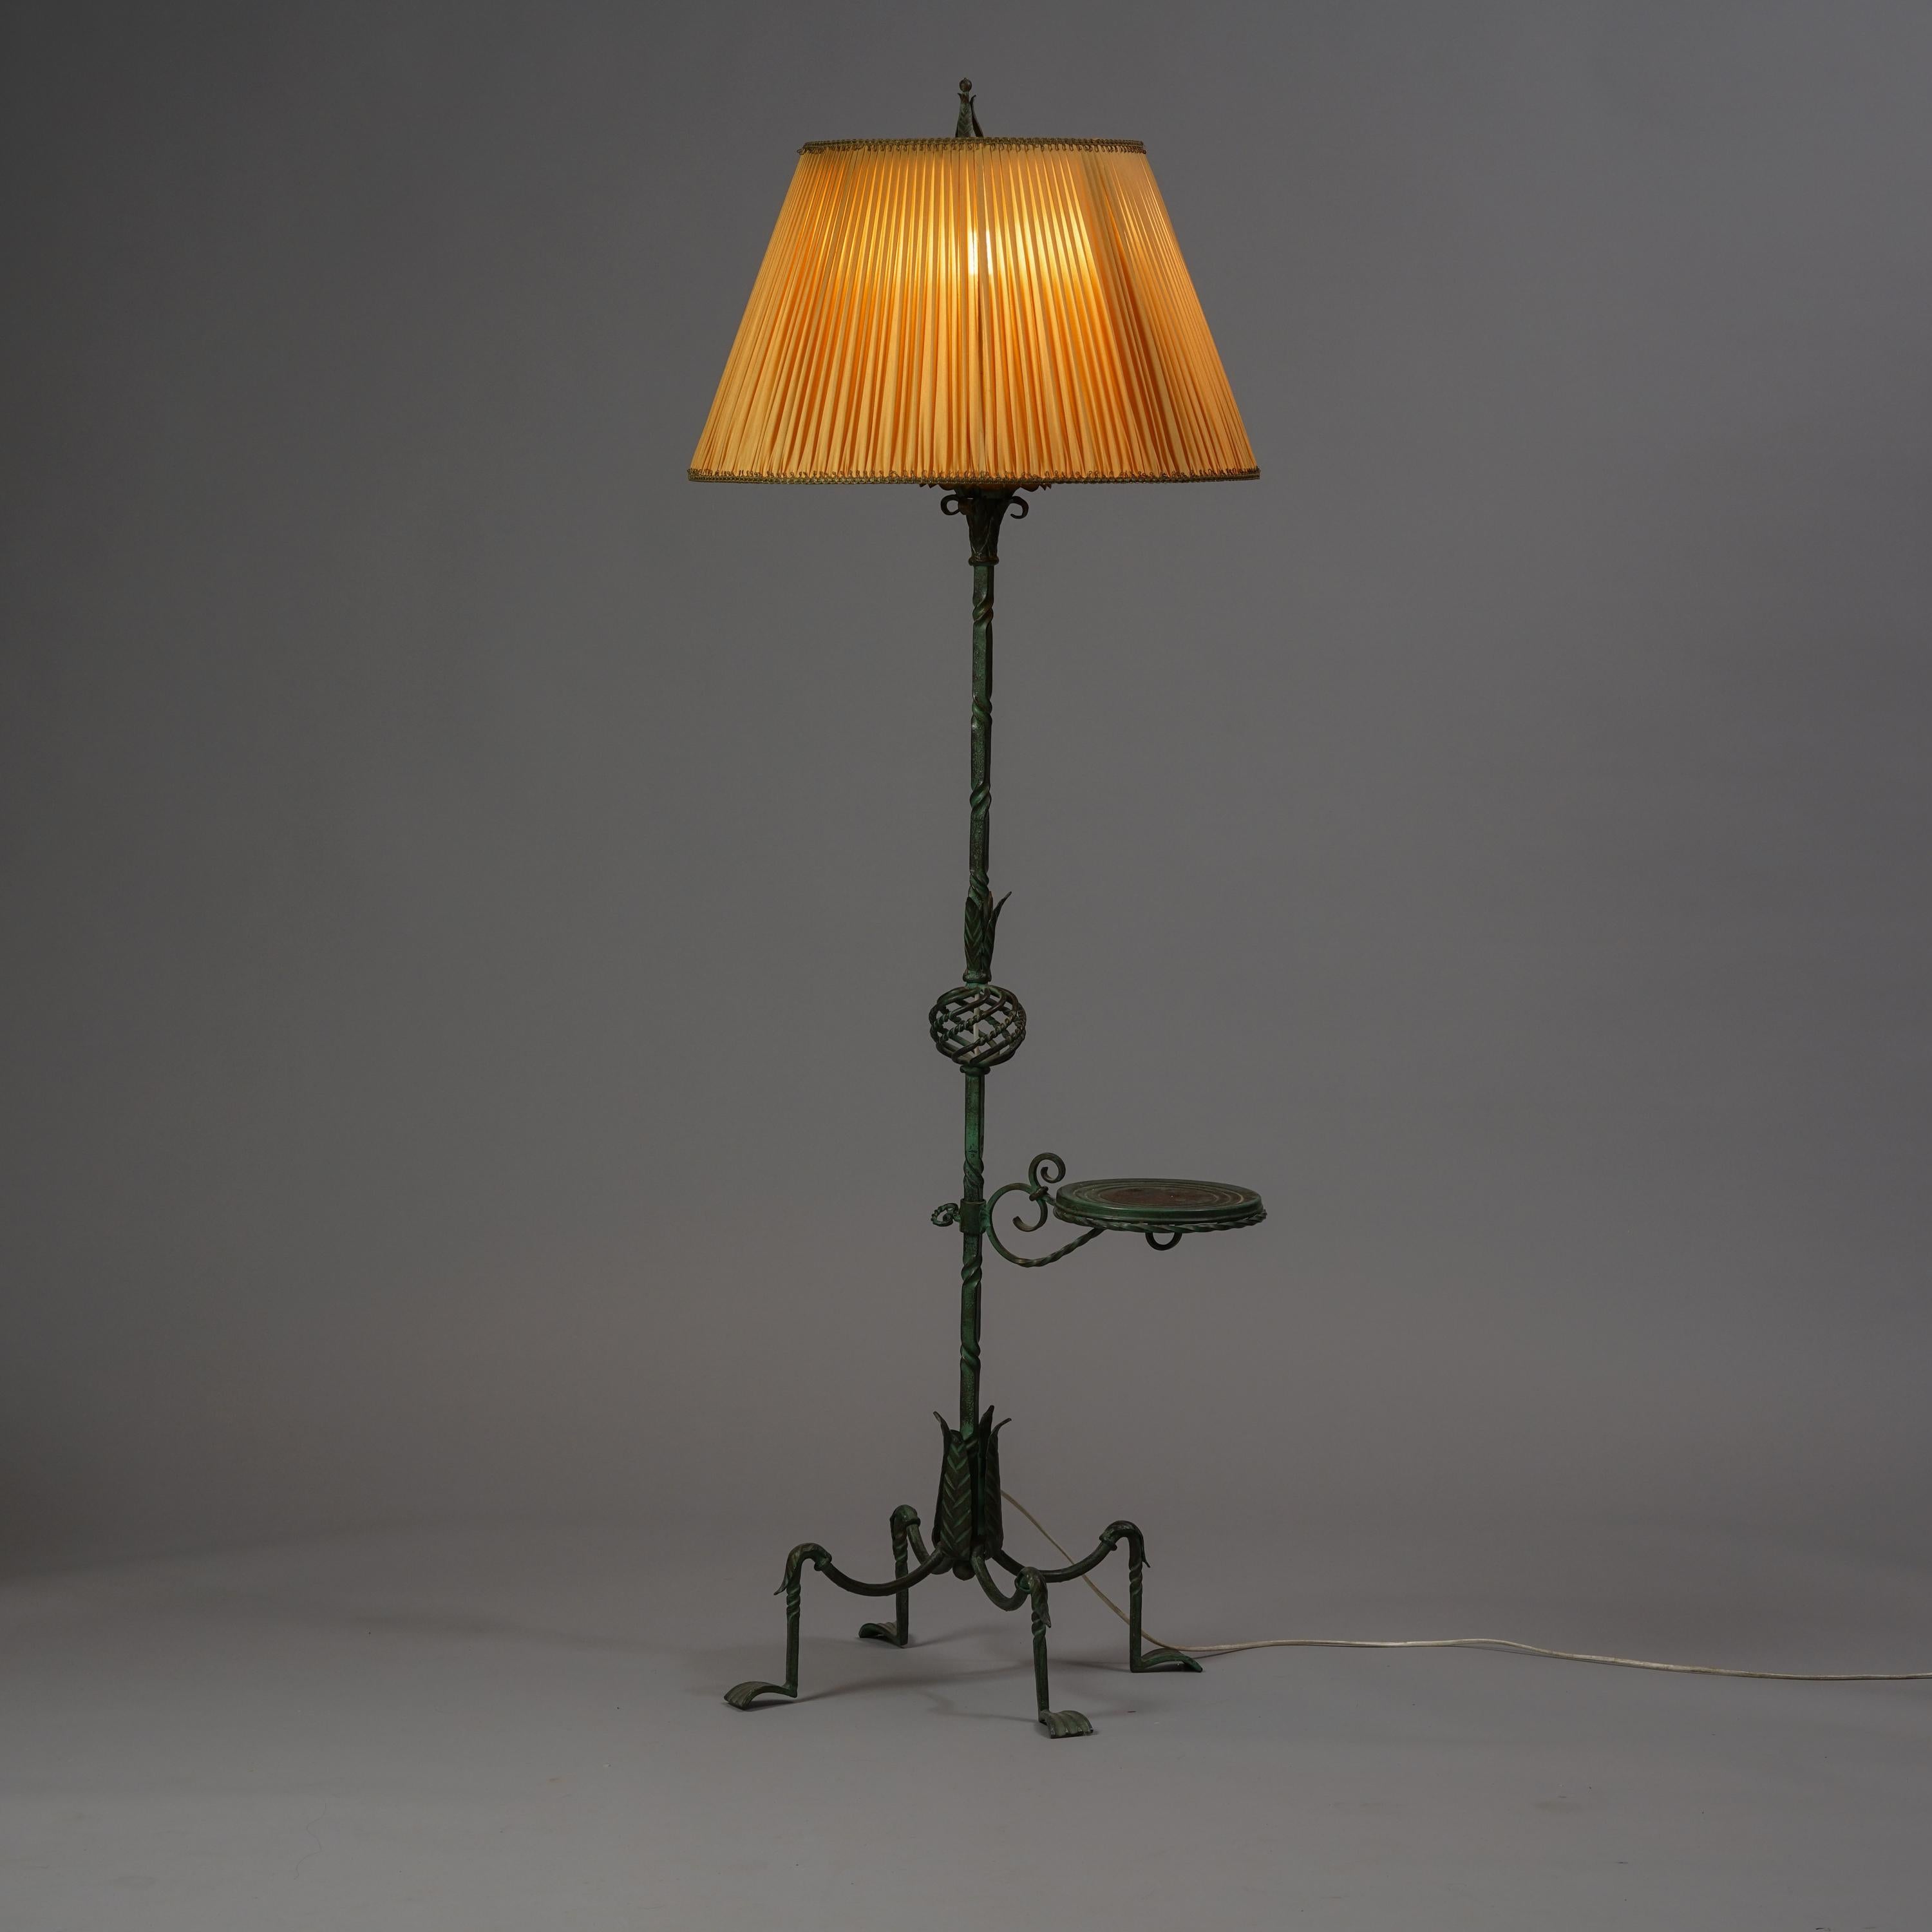 Fabric Rare Finnish Iron Floor Lamp Model 811 A by Taidetakomo Hakkarainen, Early 1900s For Sale